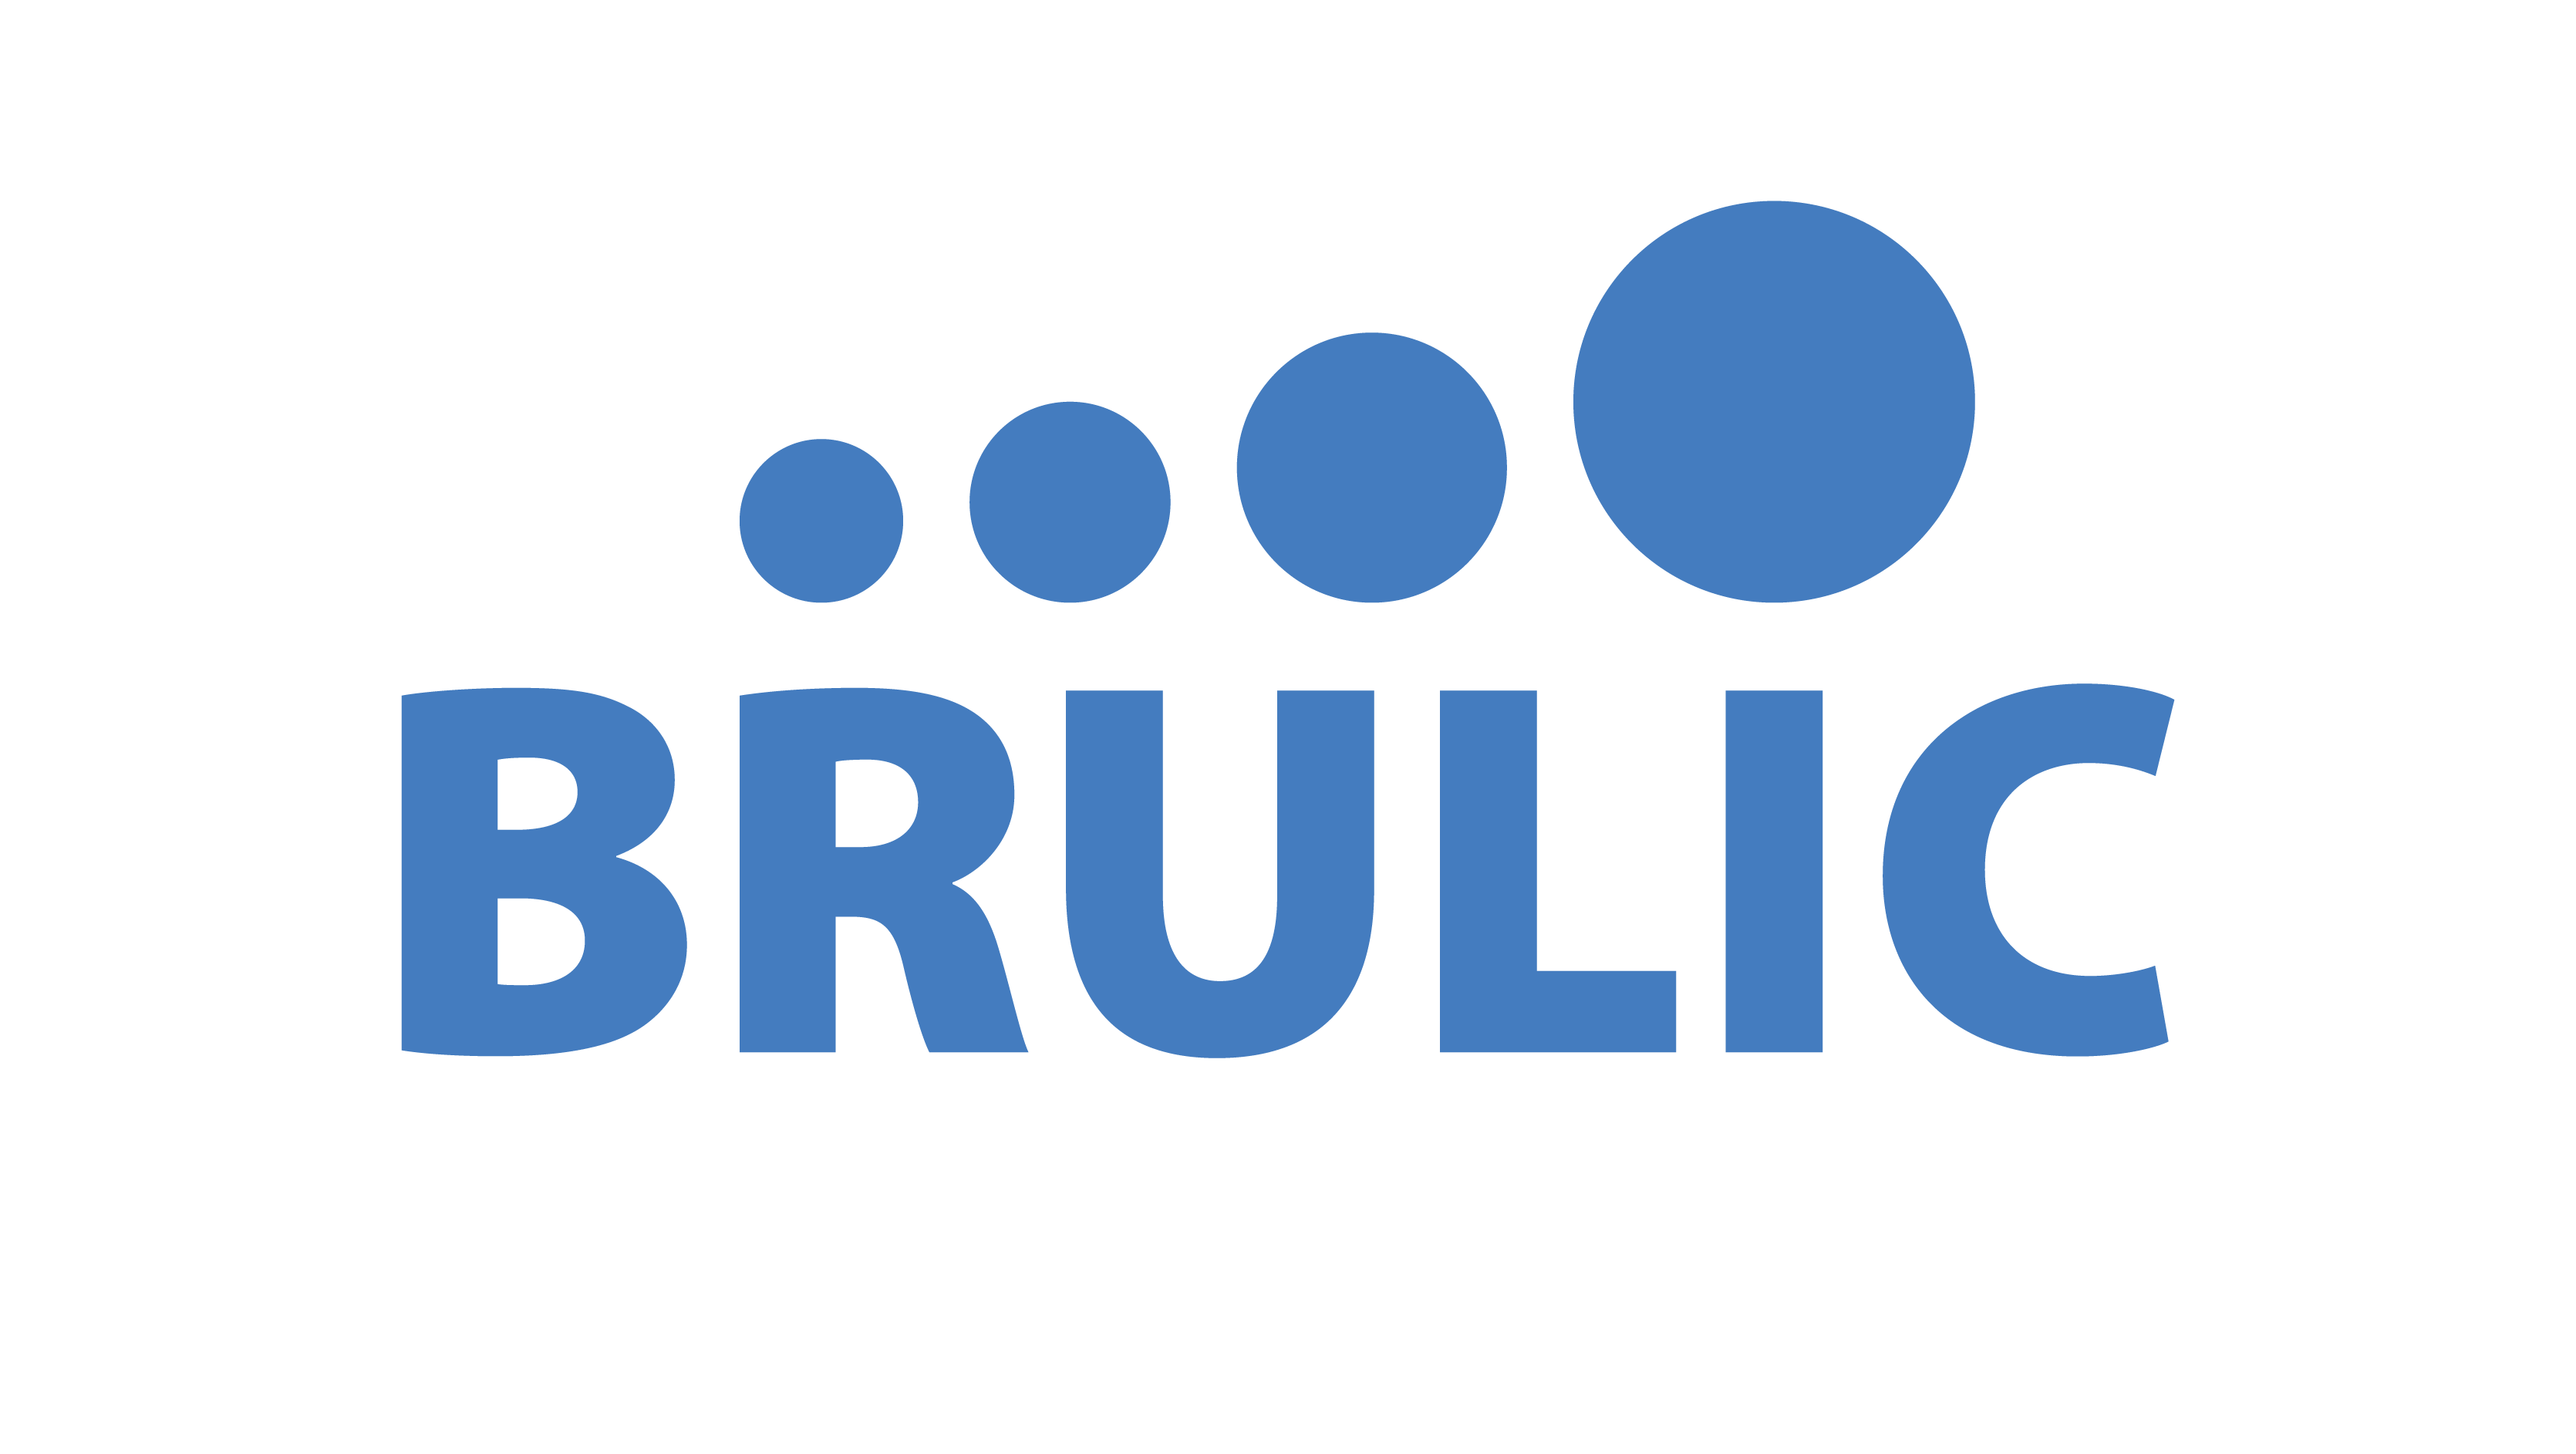 BRULIC logo